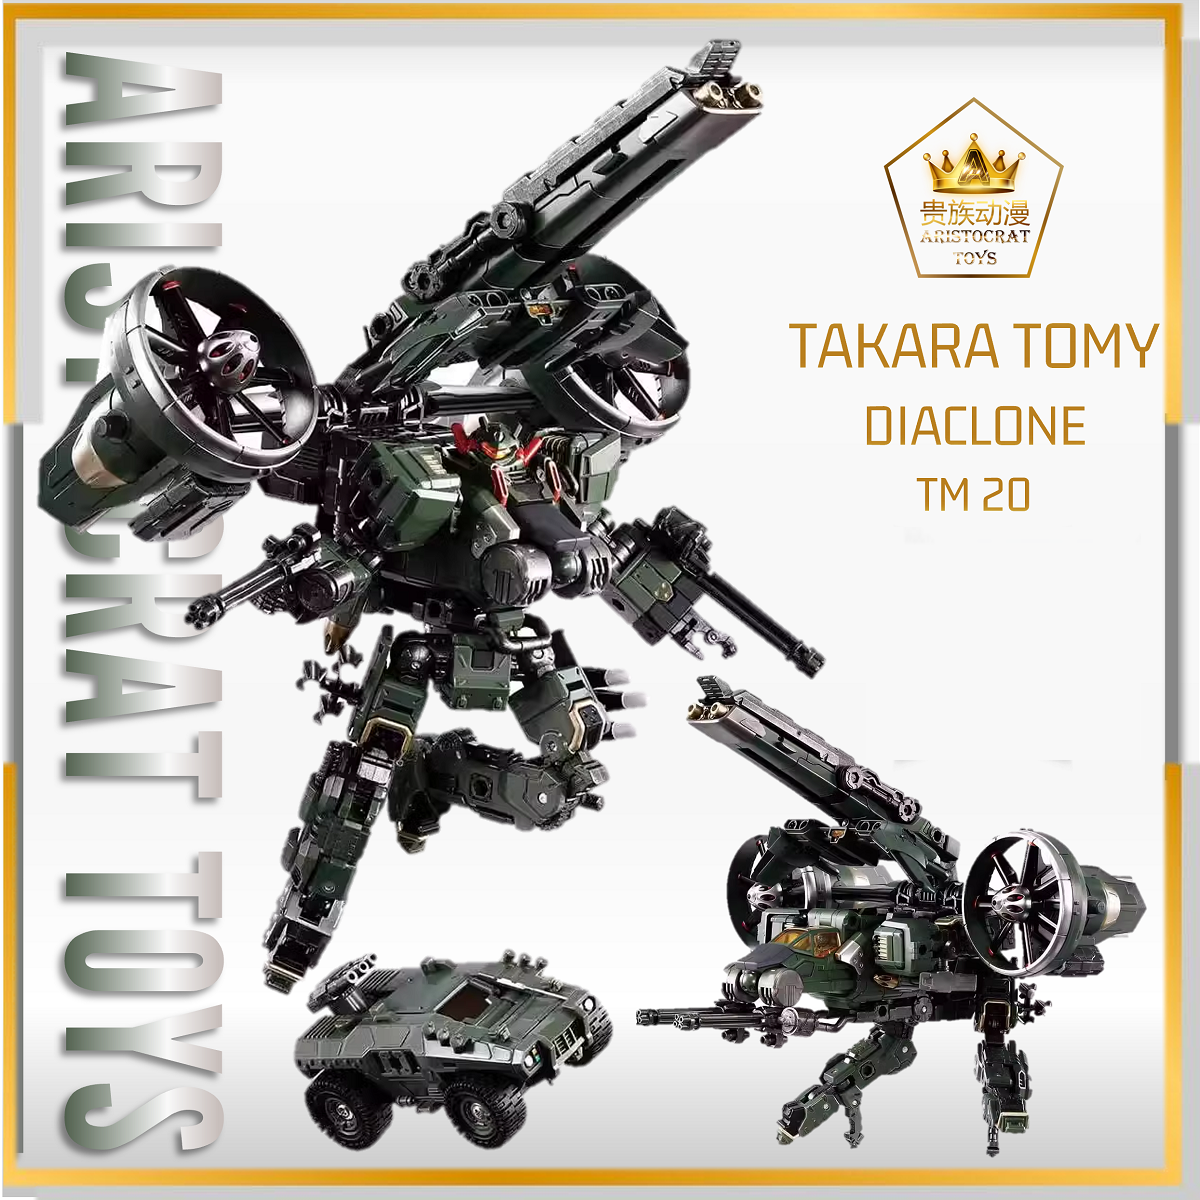 TAKARA 戴亚克隆限定 TM20 tm-20 旋转升降单元 宇宙海兵队